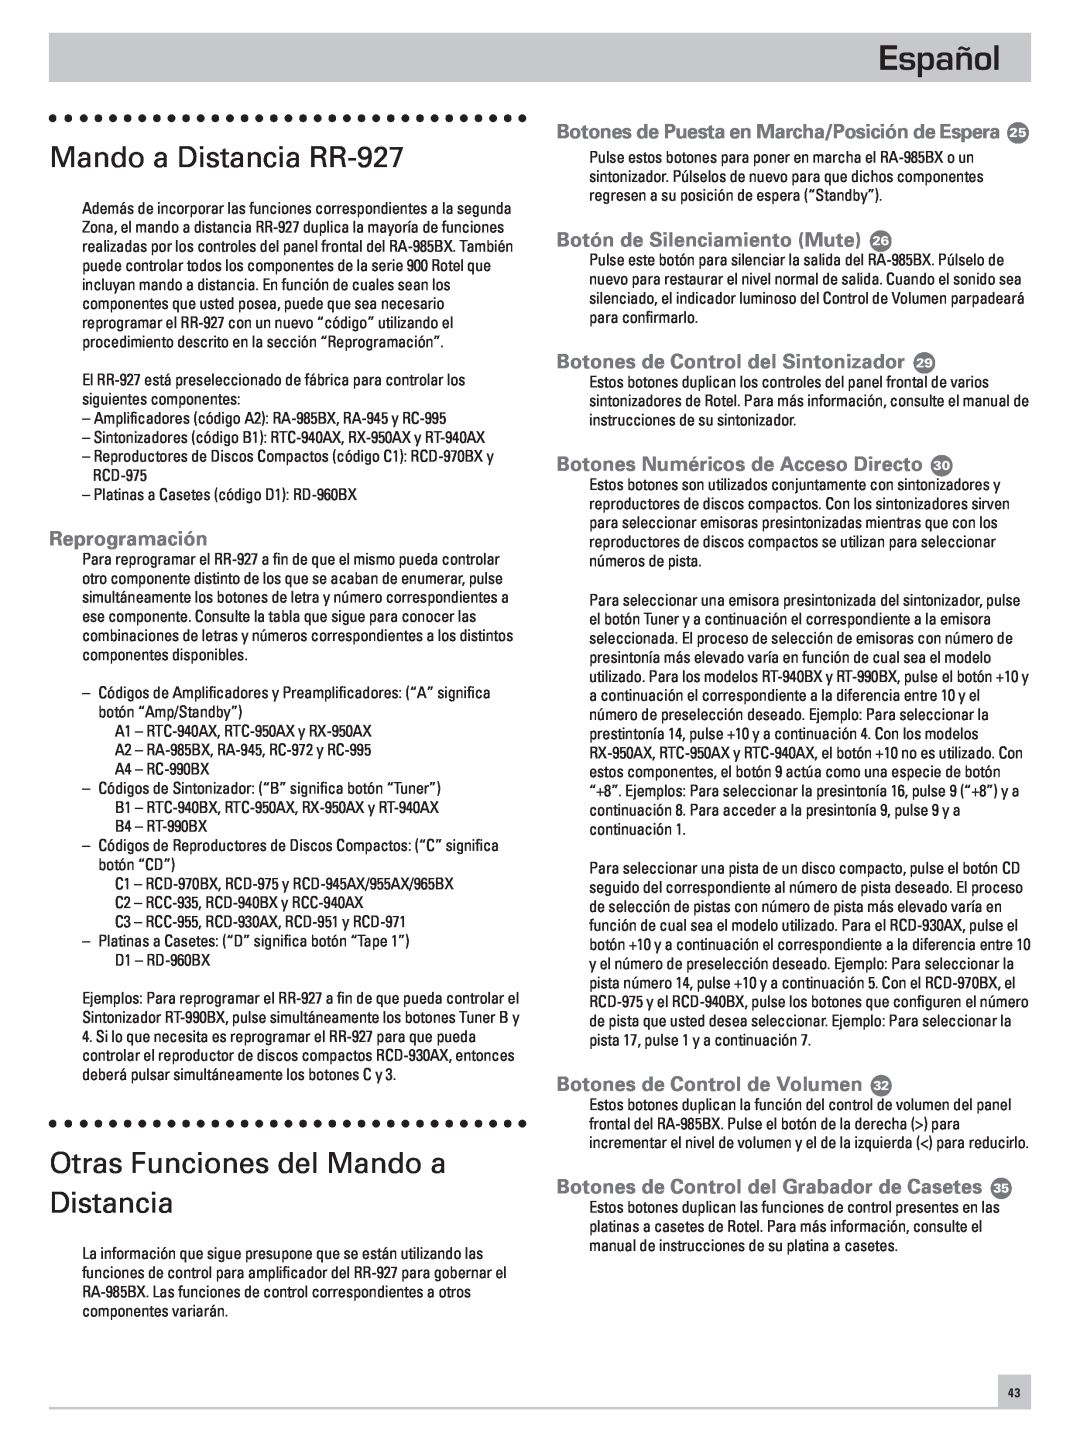 Rotel RA-985BX owner manual Mando a Distancia RR-927, Otras Funciones del Mando a Distancia, Reprogramación, Español 